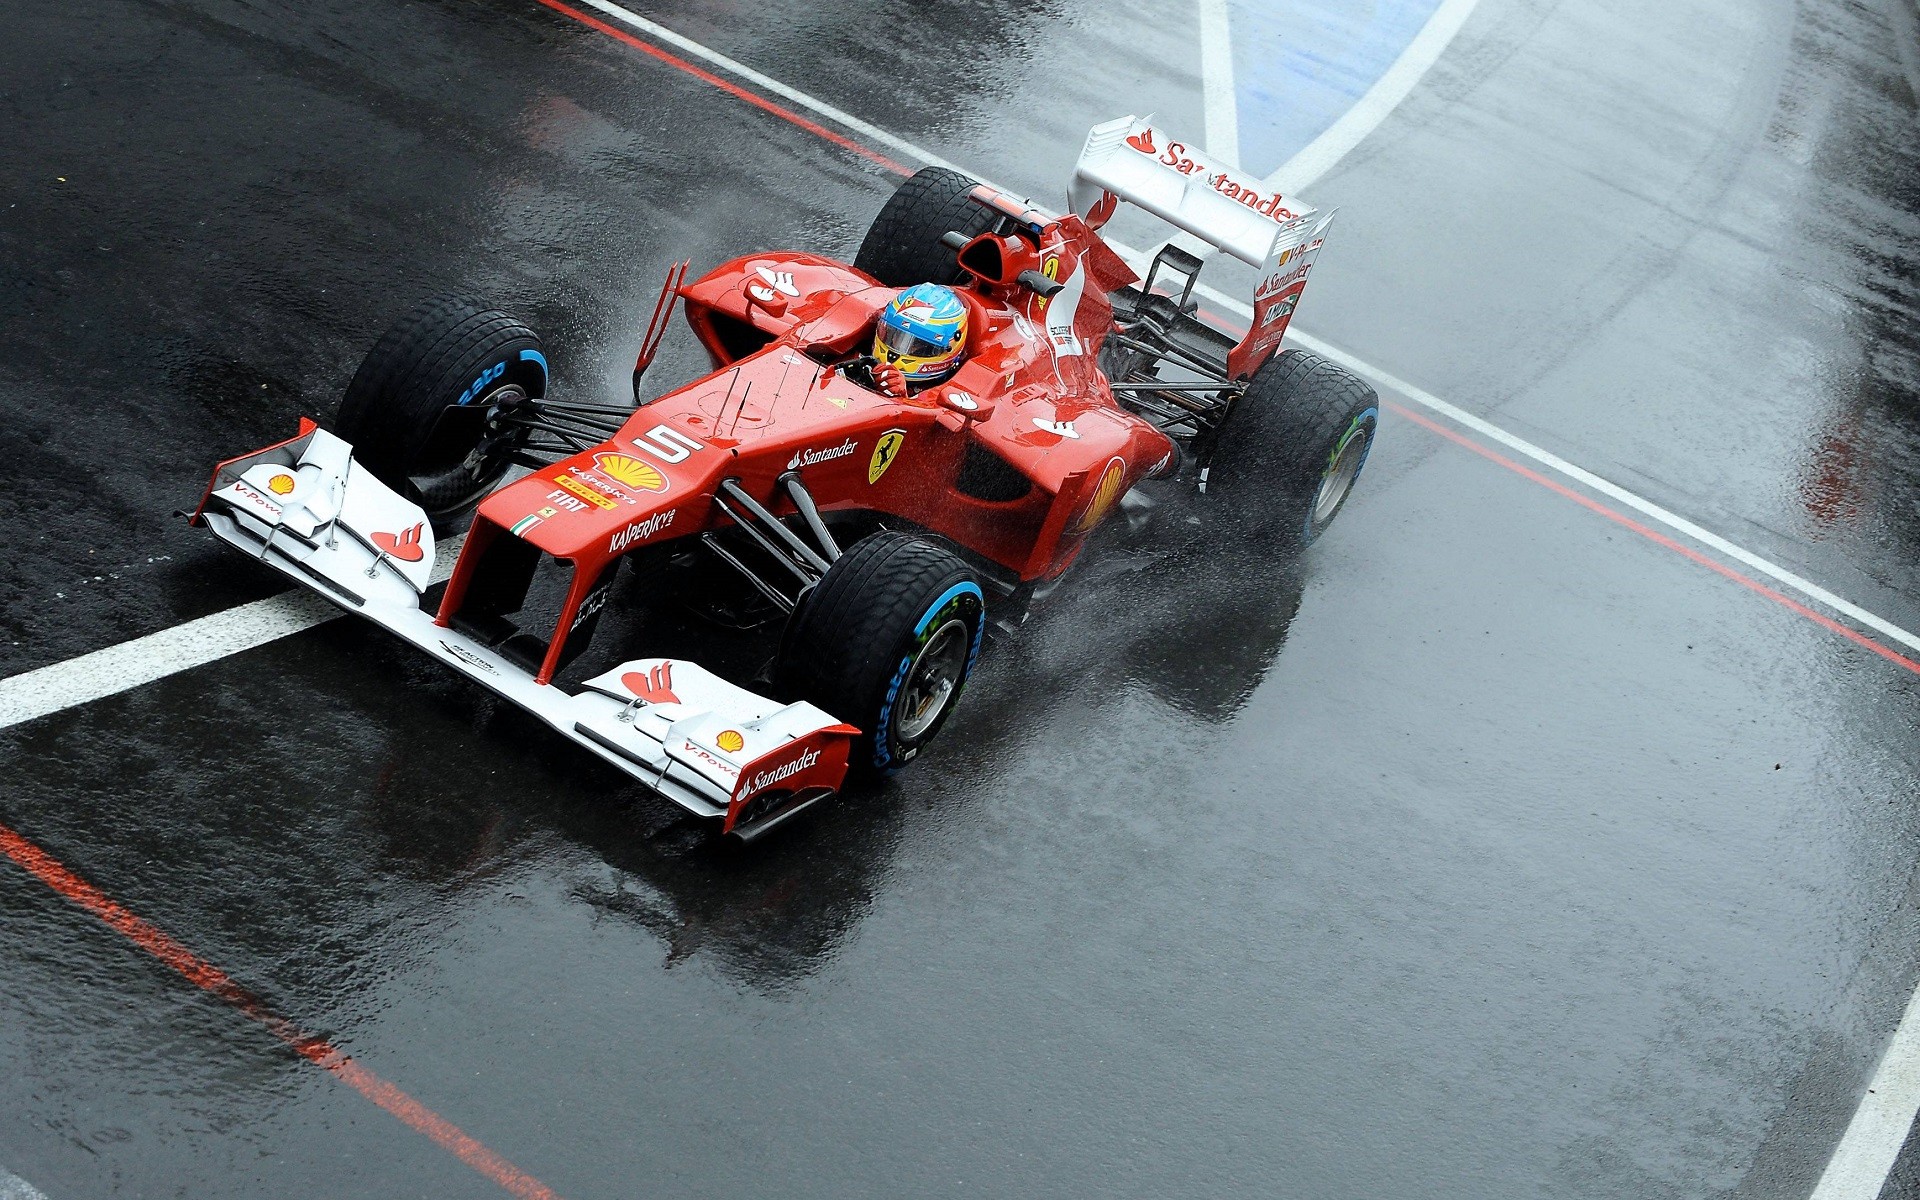 General 1920x1200 Fernando Alonso Ferrari Formula 1 ferrari formula 1 car wet road rain water drops race cars motorsport vehicle red cars sport